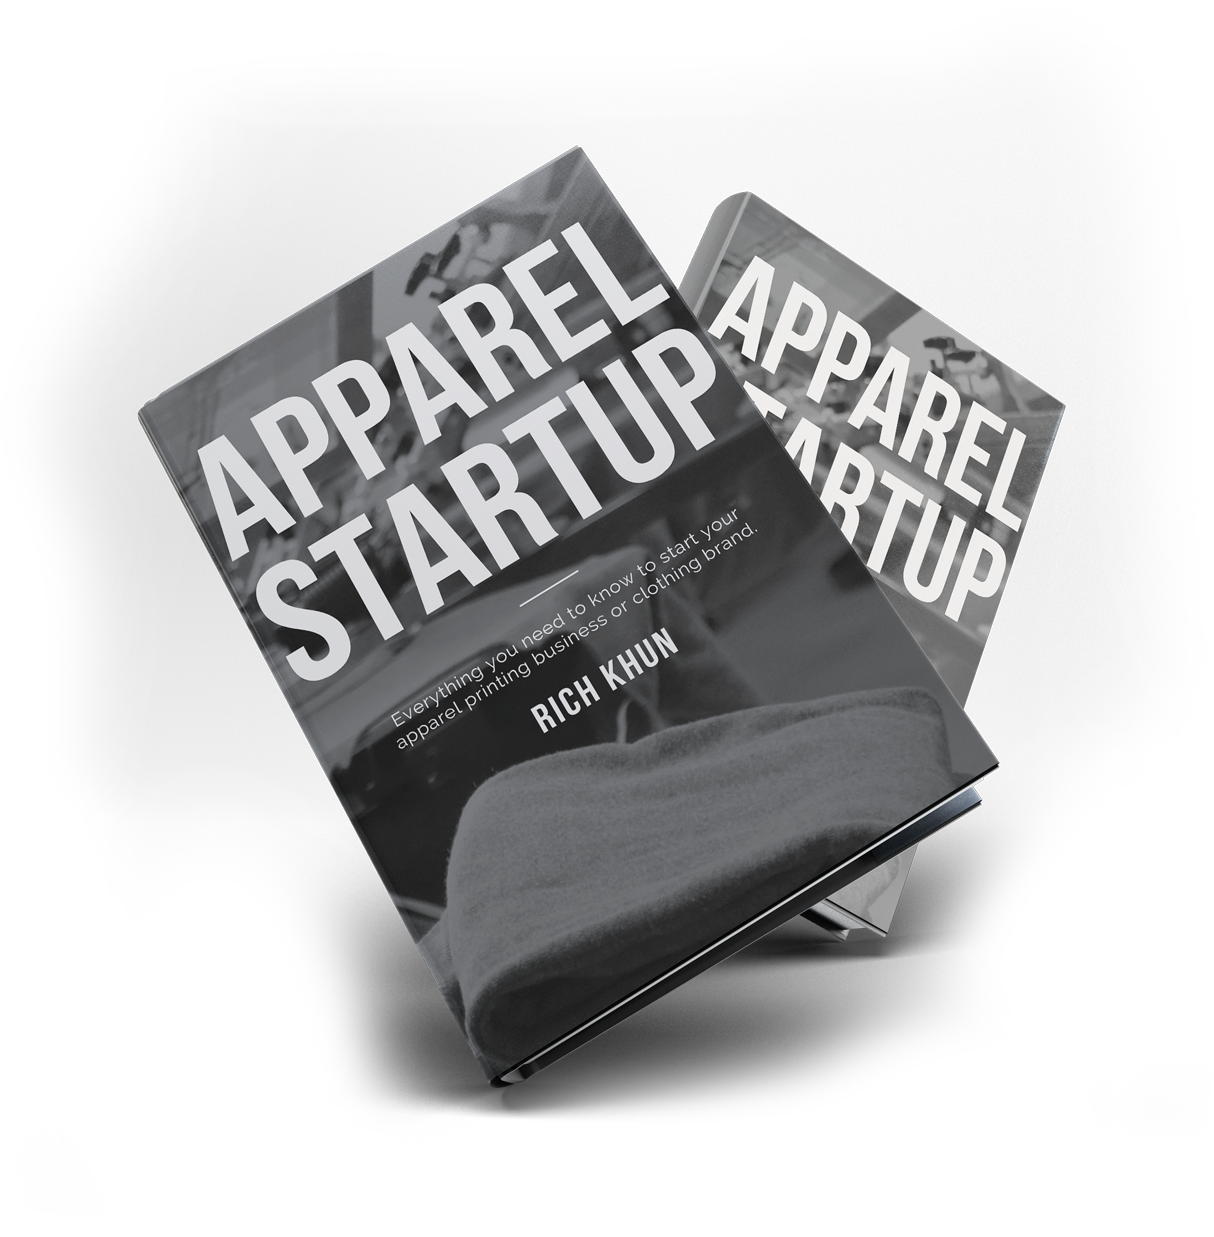 Apparel Startup E-Book